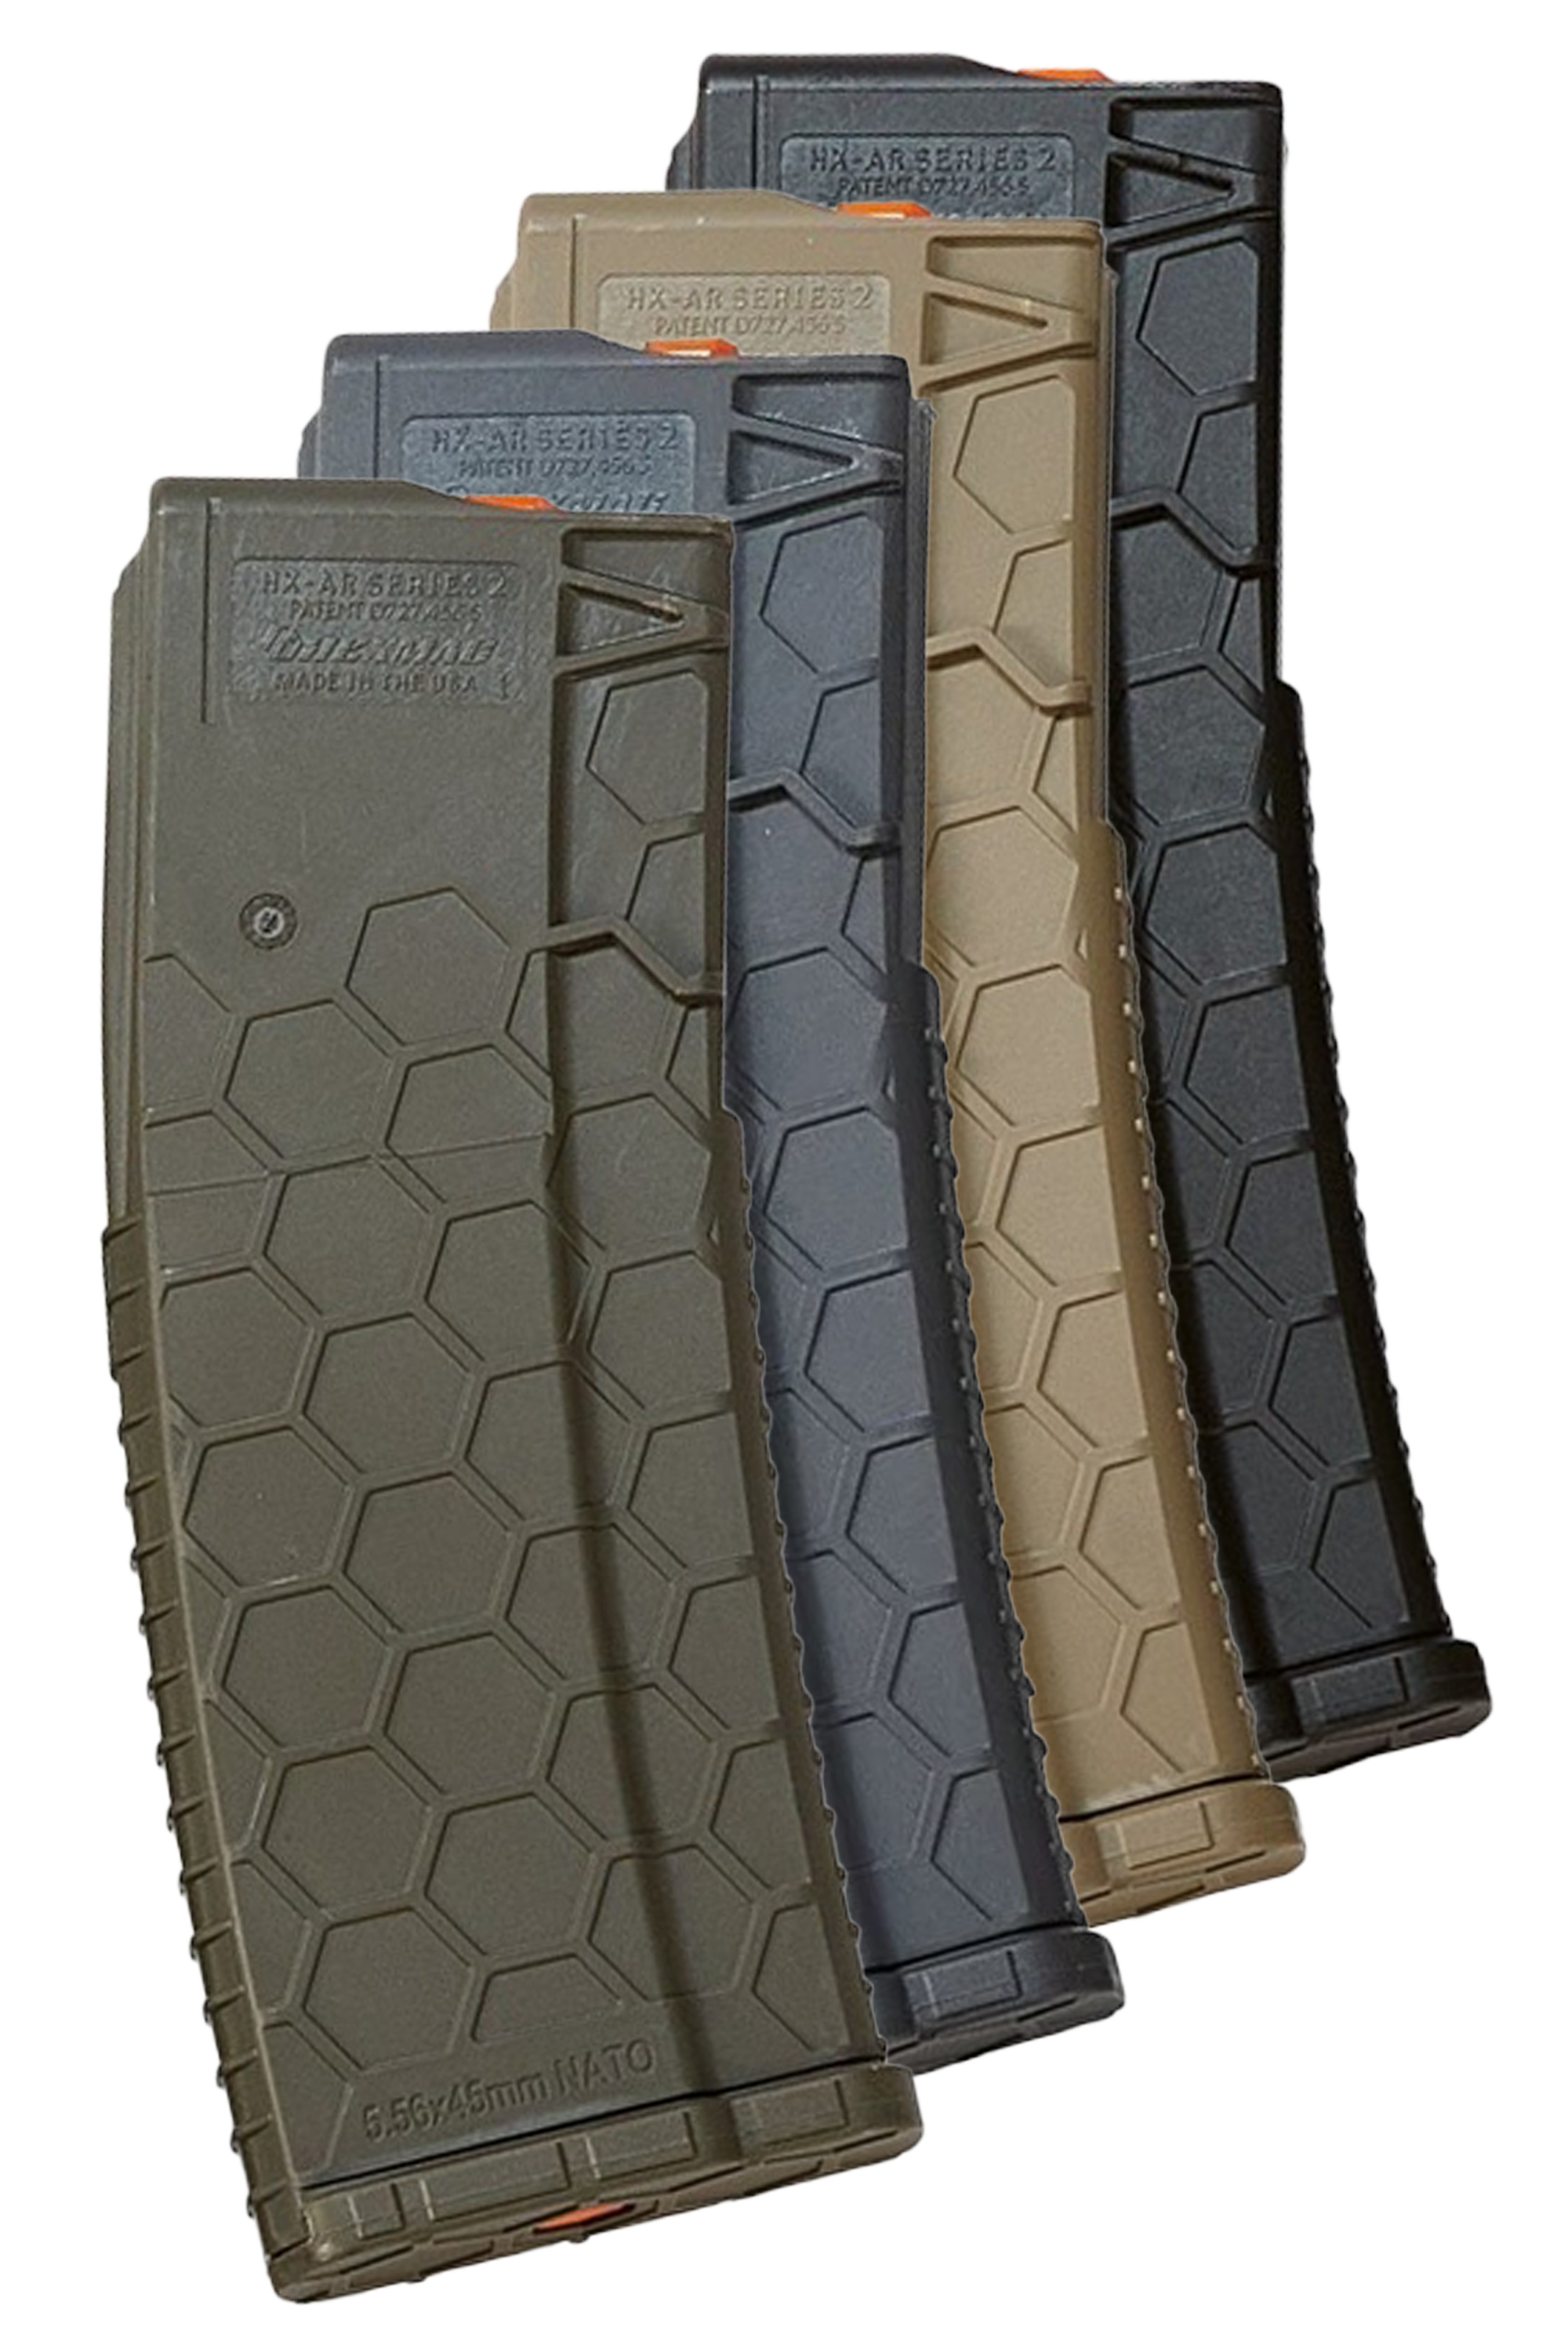 Hexmag Series 2 AR-15 .223 / 5.56 30-Round Polymer Magazine